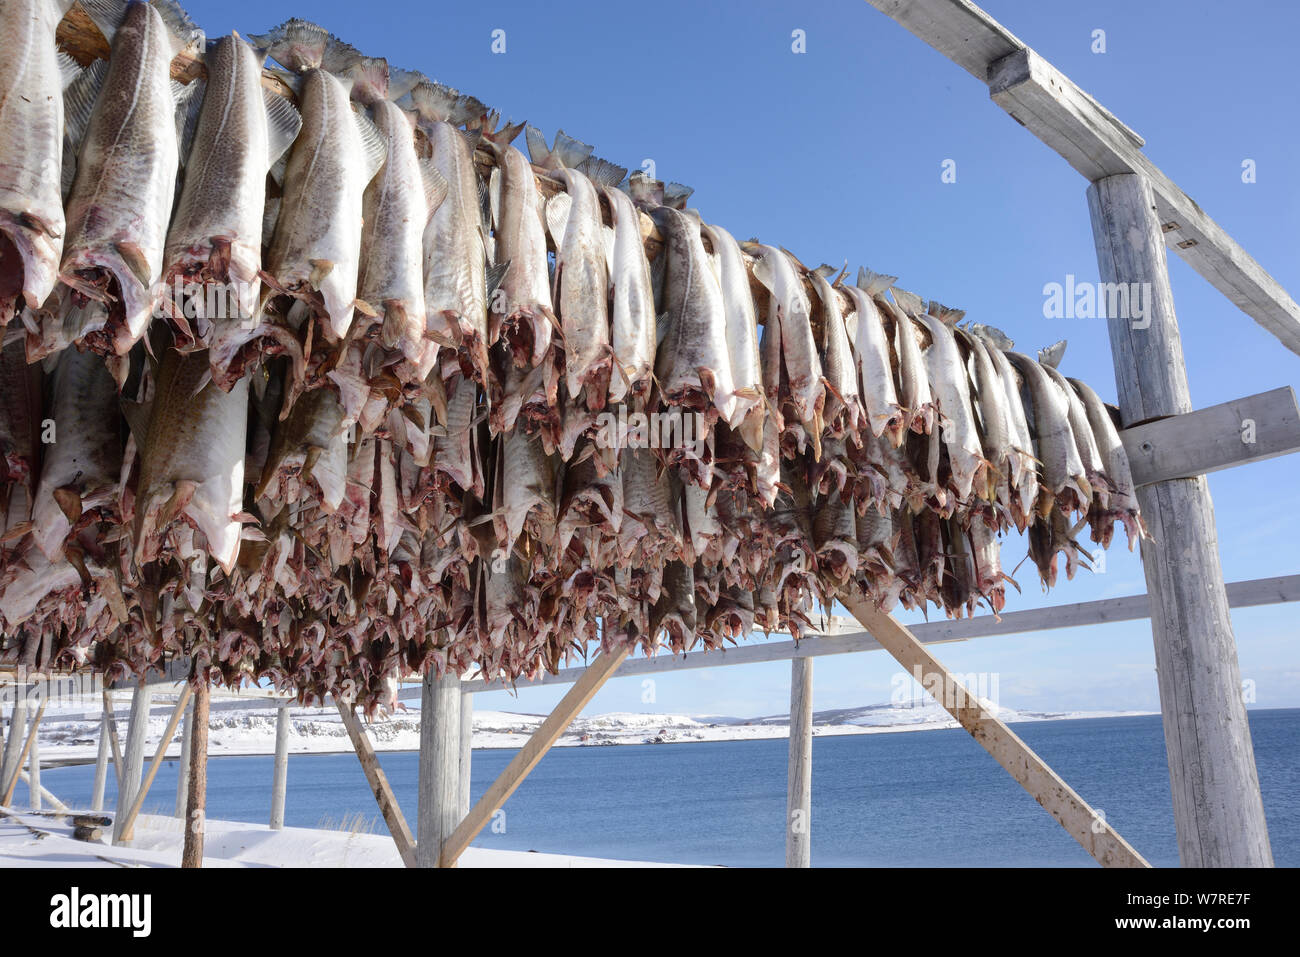 Fische trocknen auf Racks, Varangerfjord, Norwegen, März 2013. Stockfoto